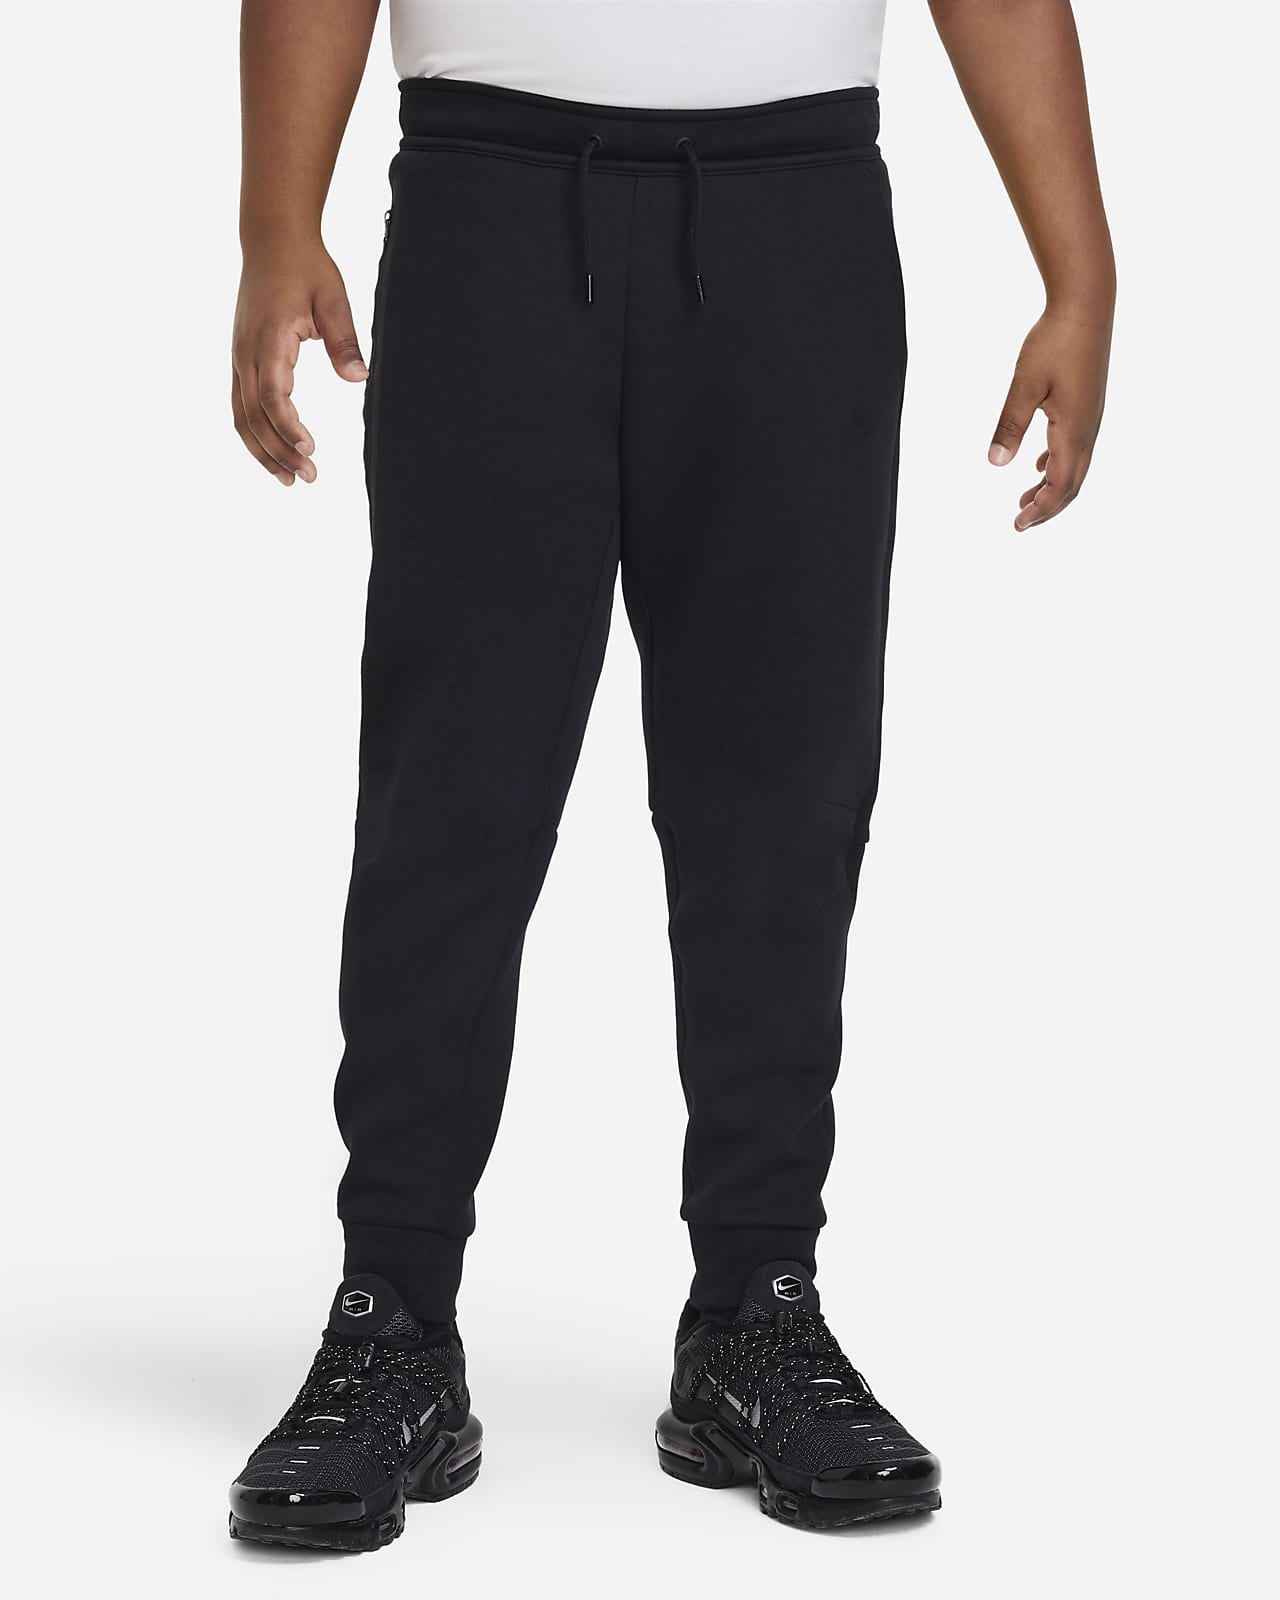 Pantaloni Nike Sportswear Tech Fleece (taglia grande) - Ragazzi